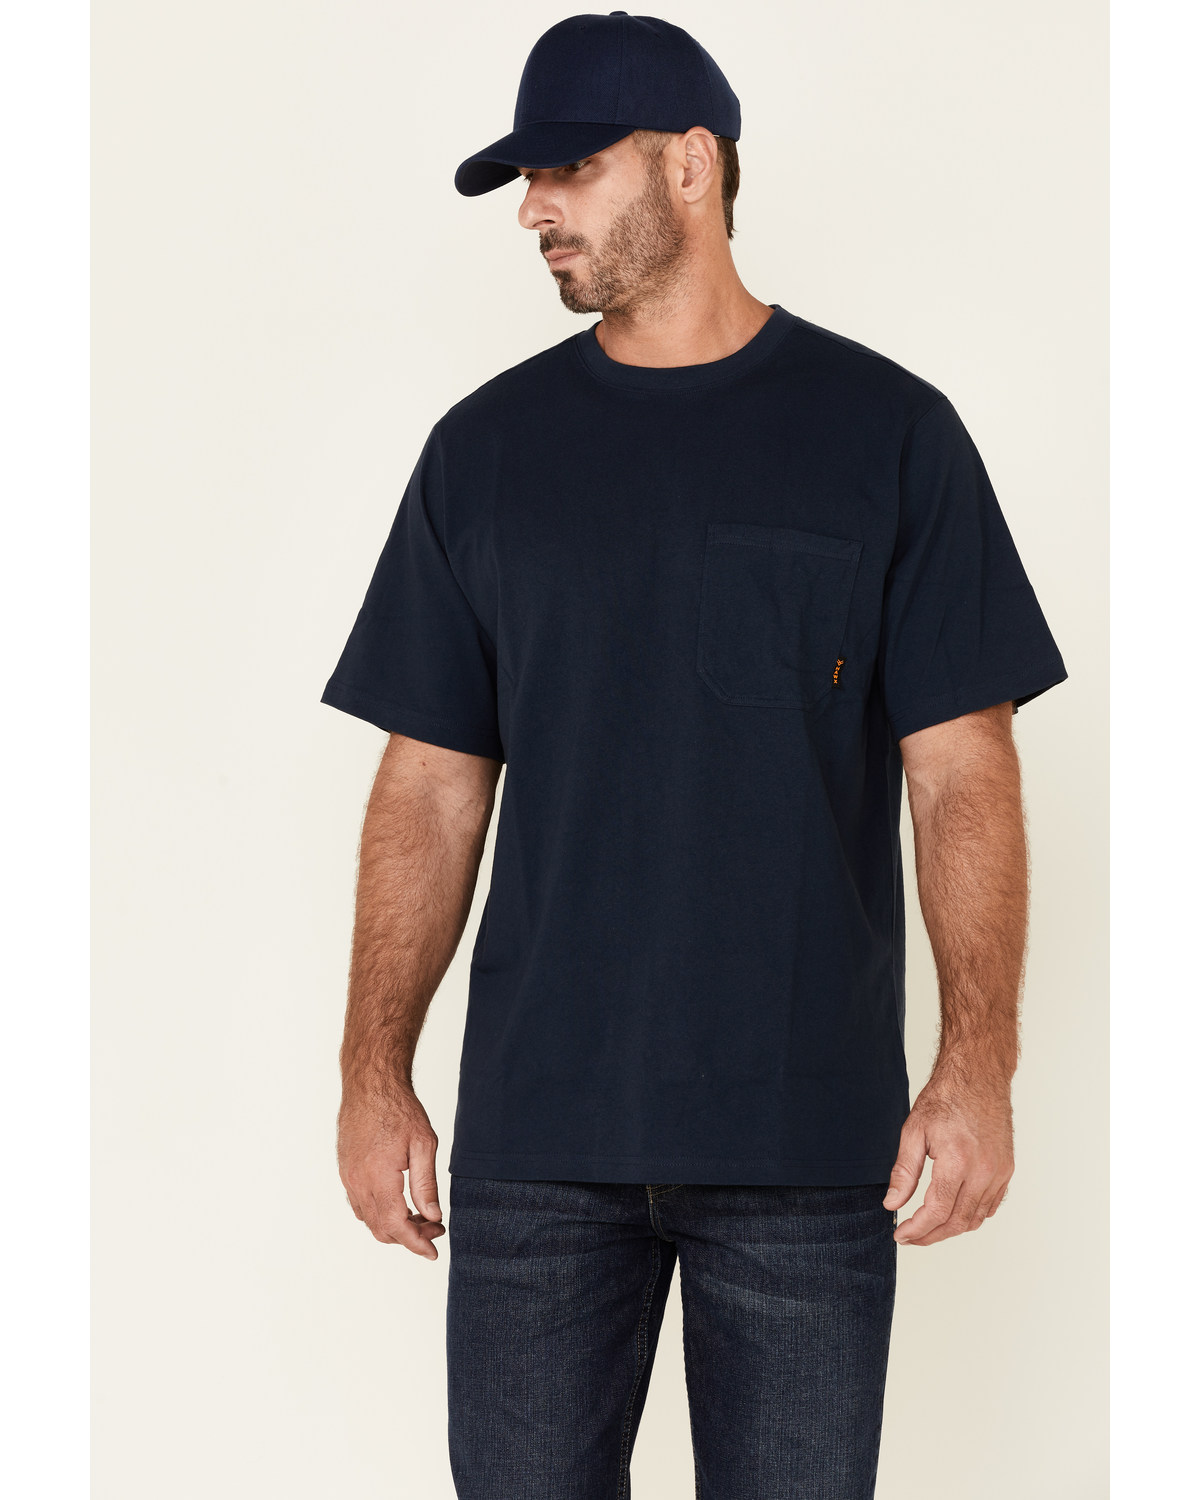 Hawx Men's Solid Navy Forge Short Sleeve Work Pocket T-Shirt